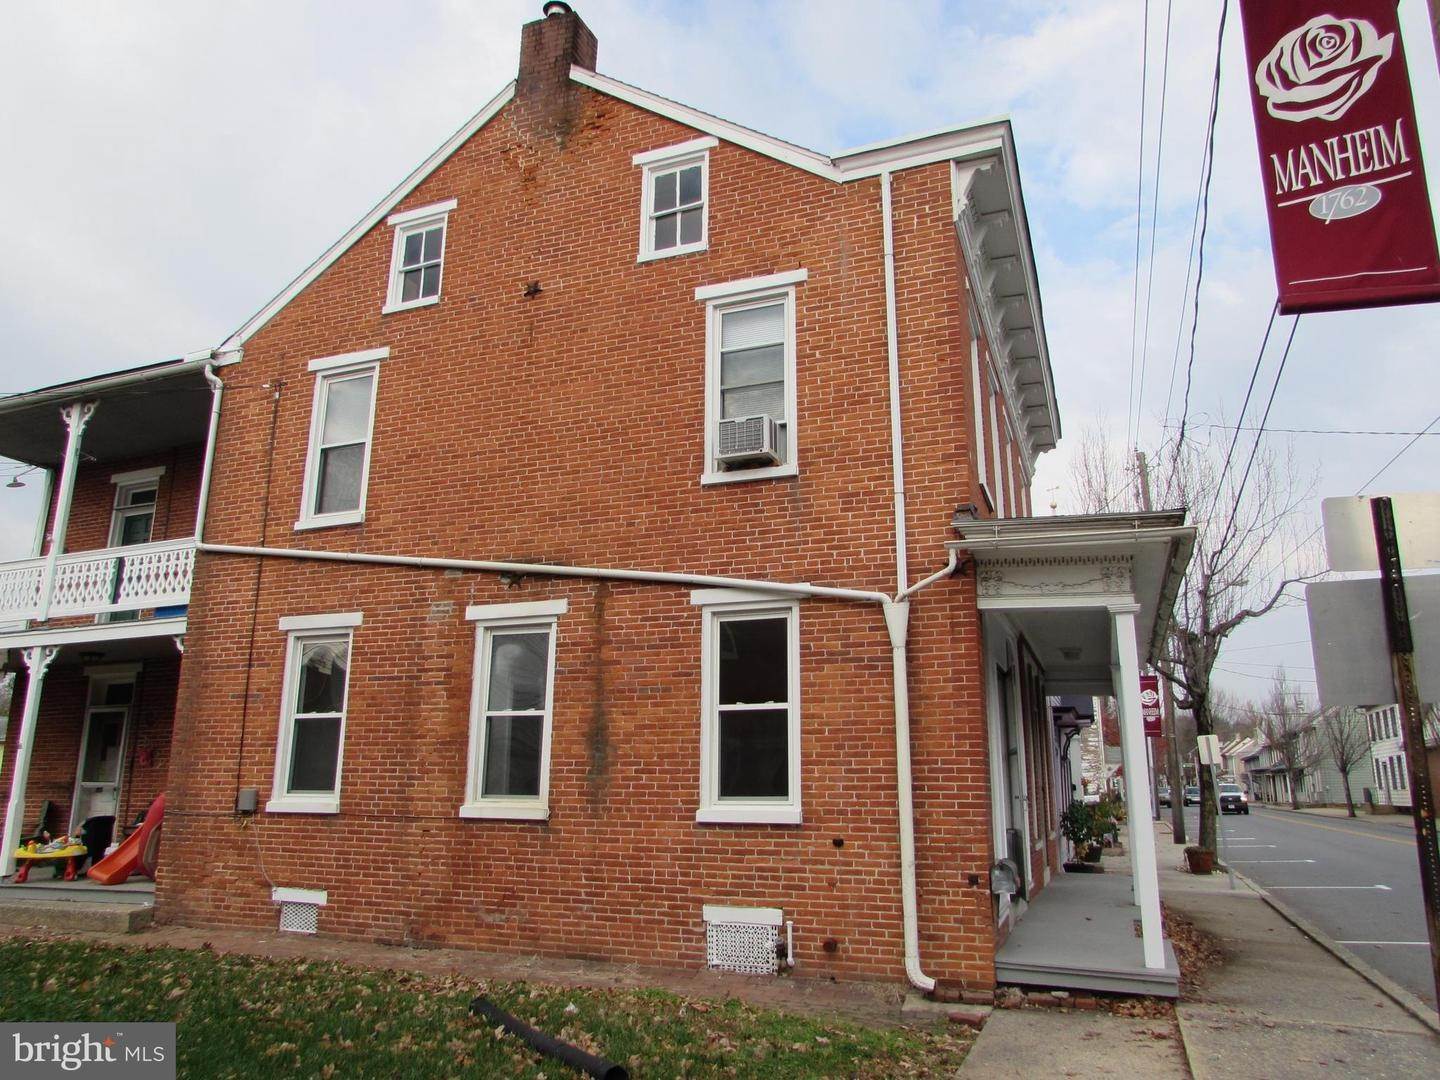 3. Residential Lease at 30 N MAIN ST #1 Manheim, Pennsylvania 17545 United States